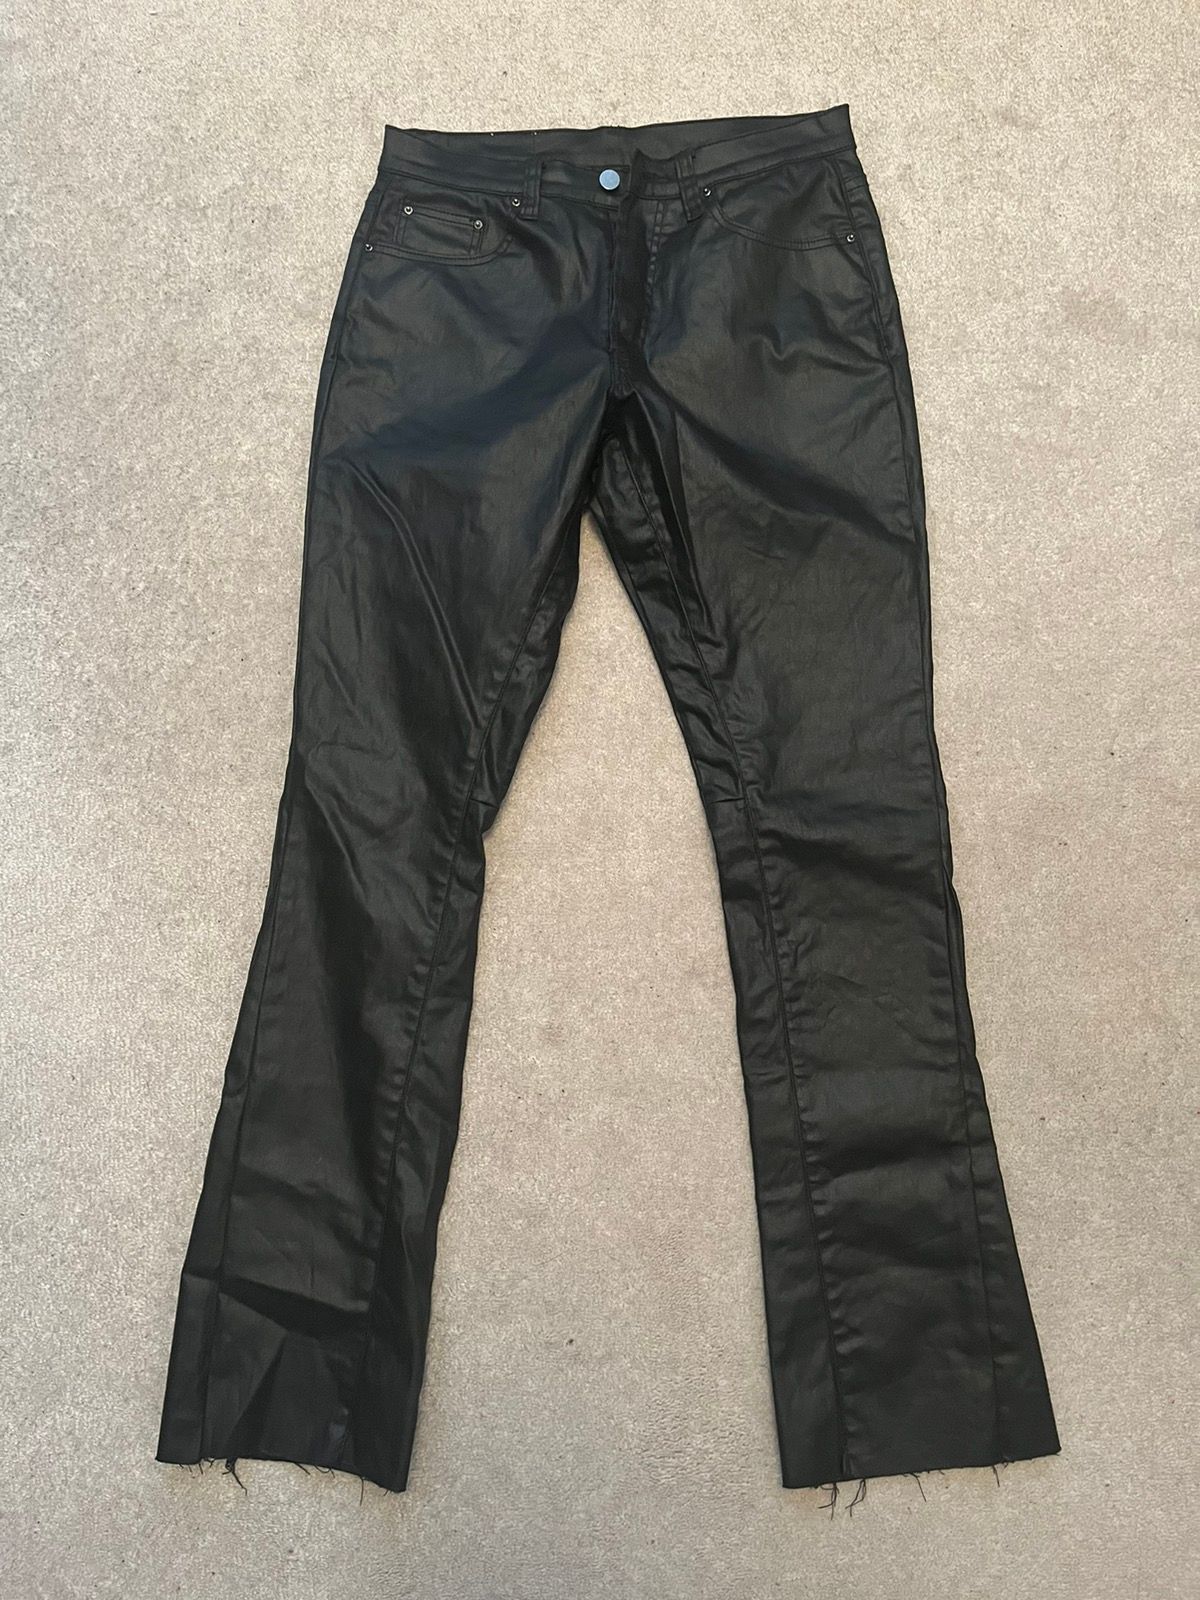 MNML MNML Waxed Black Flare Denim Jeans | Grailed